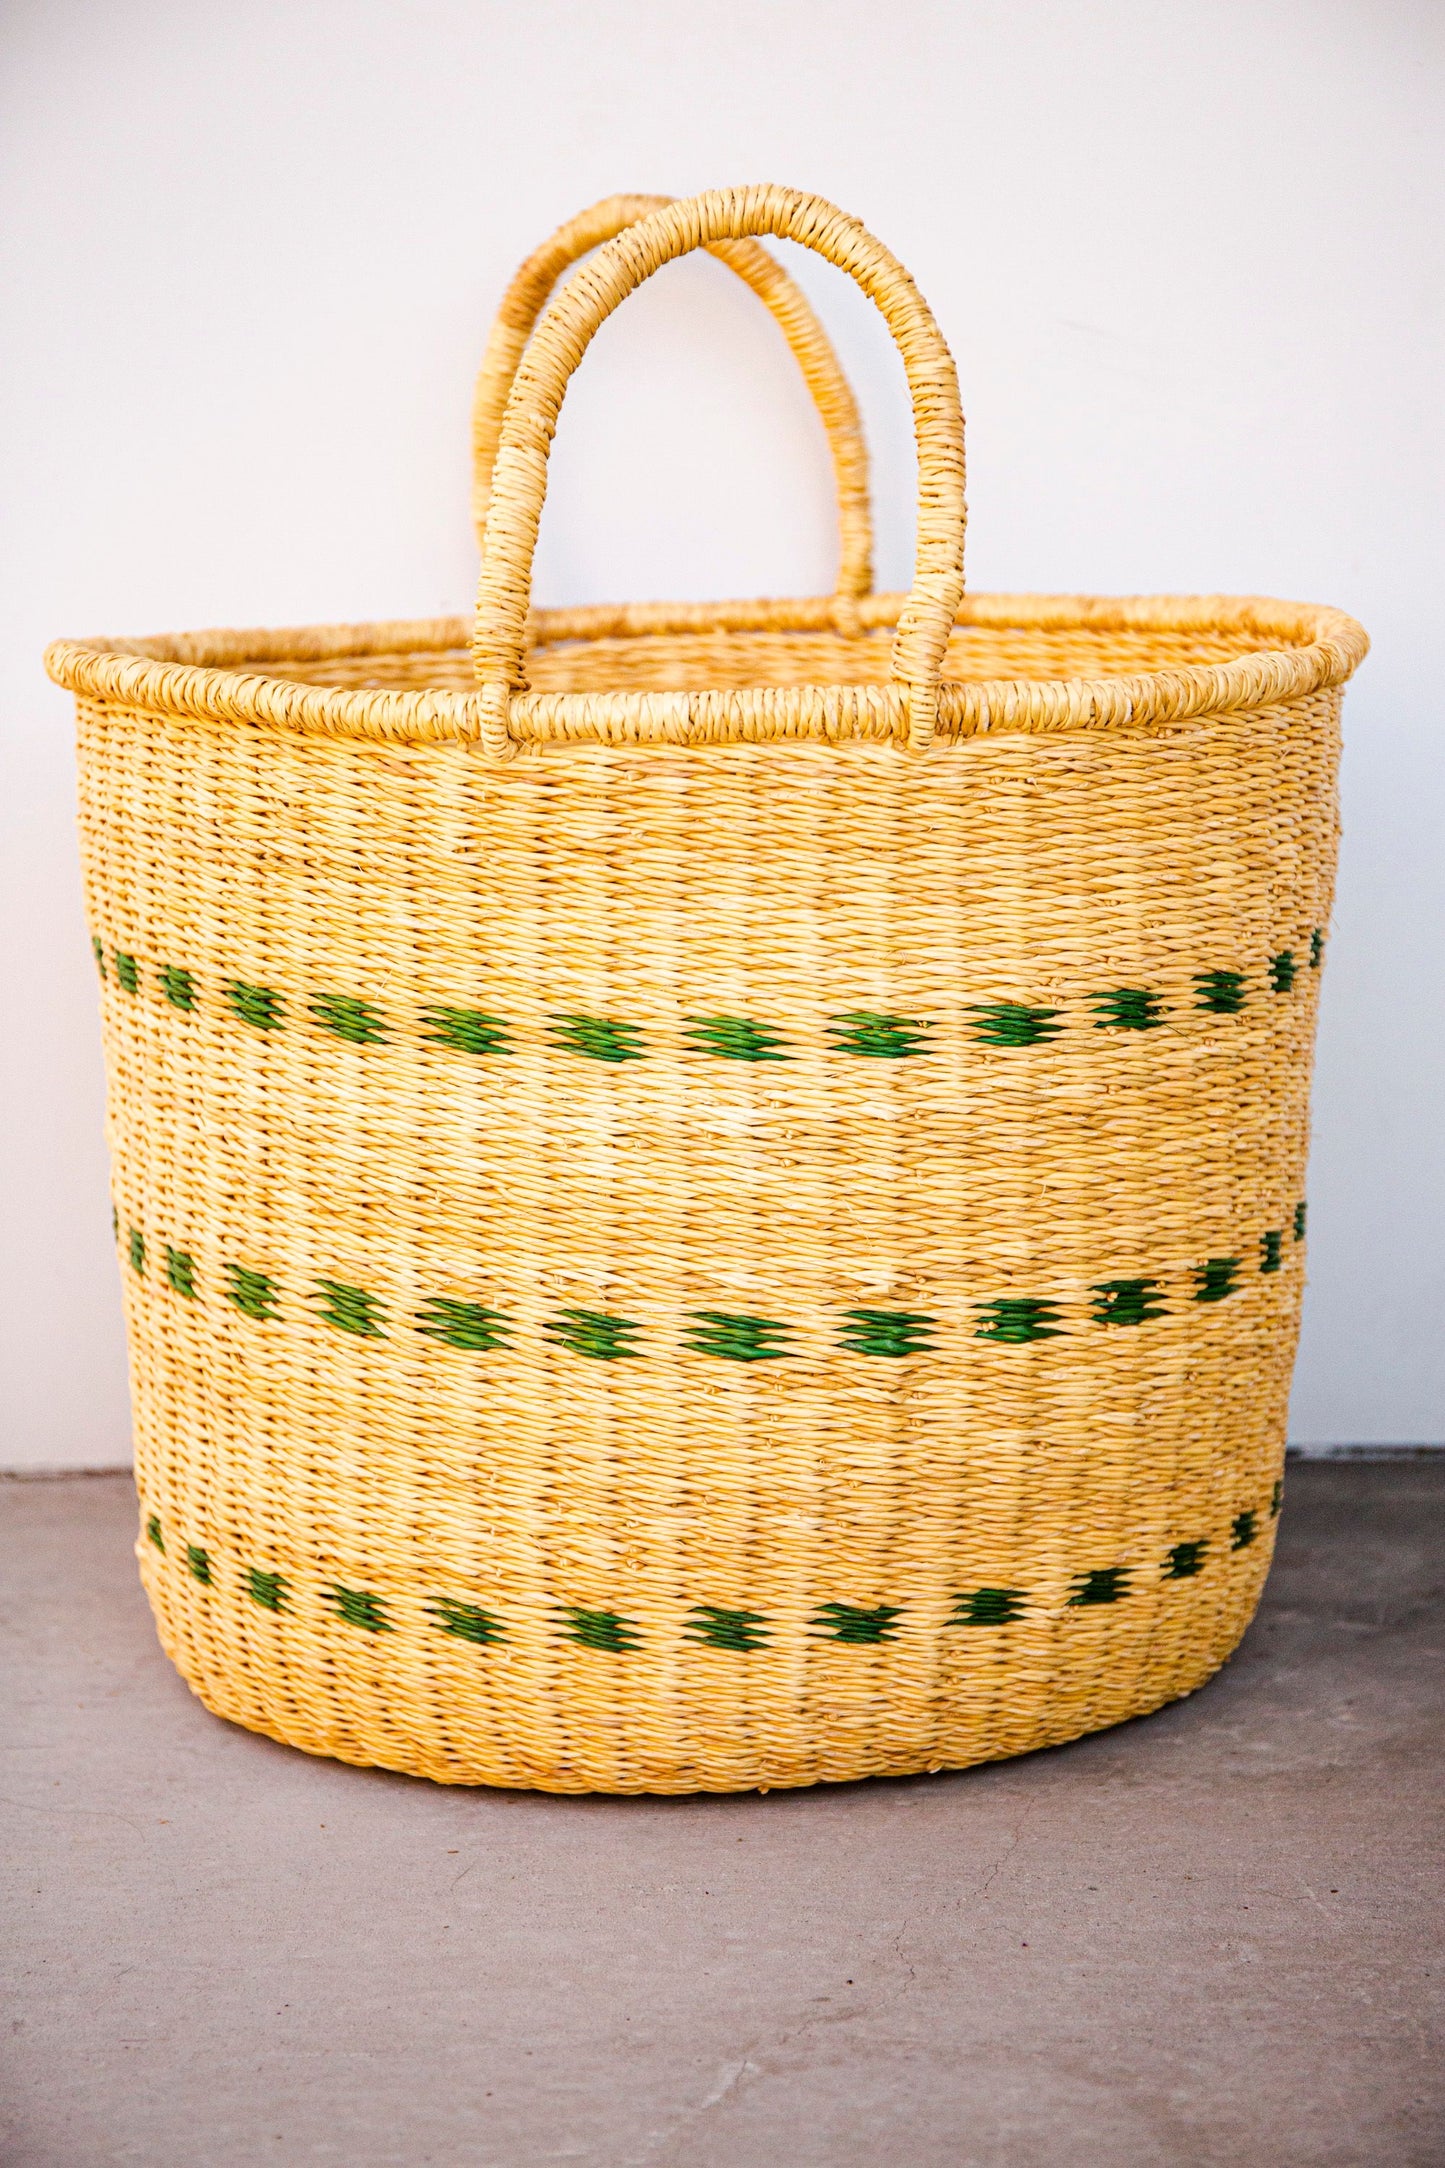 Handmade Woven Storage Baskets